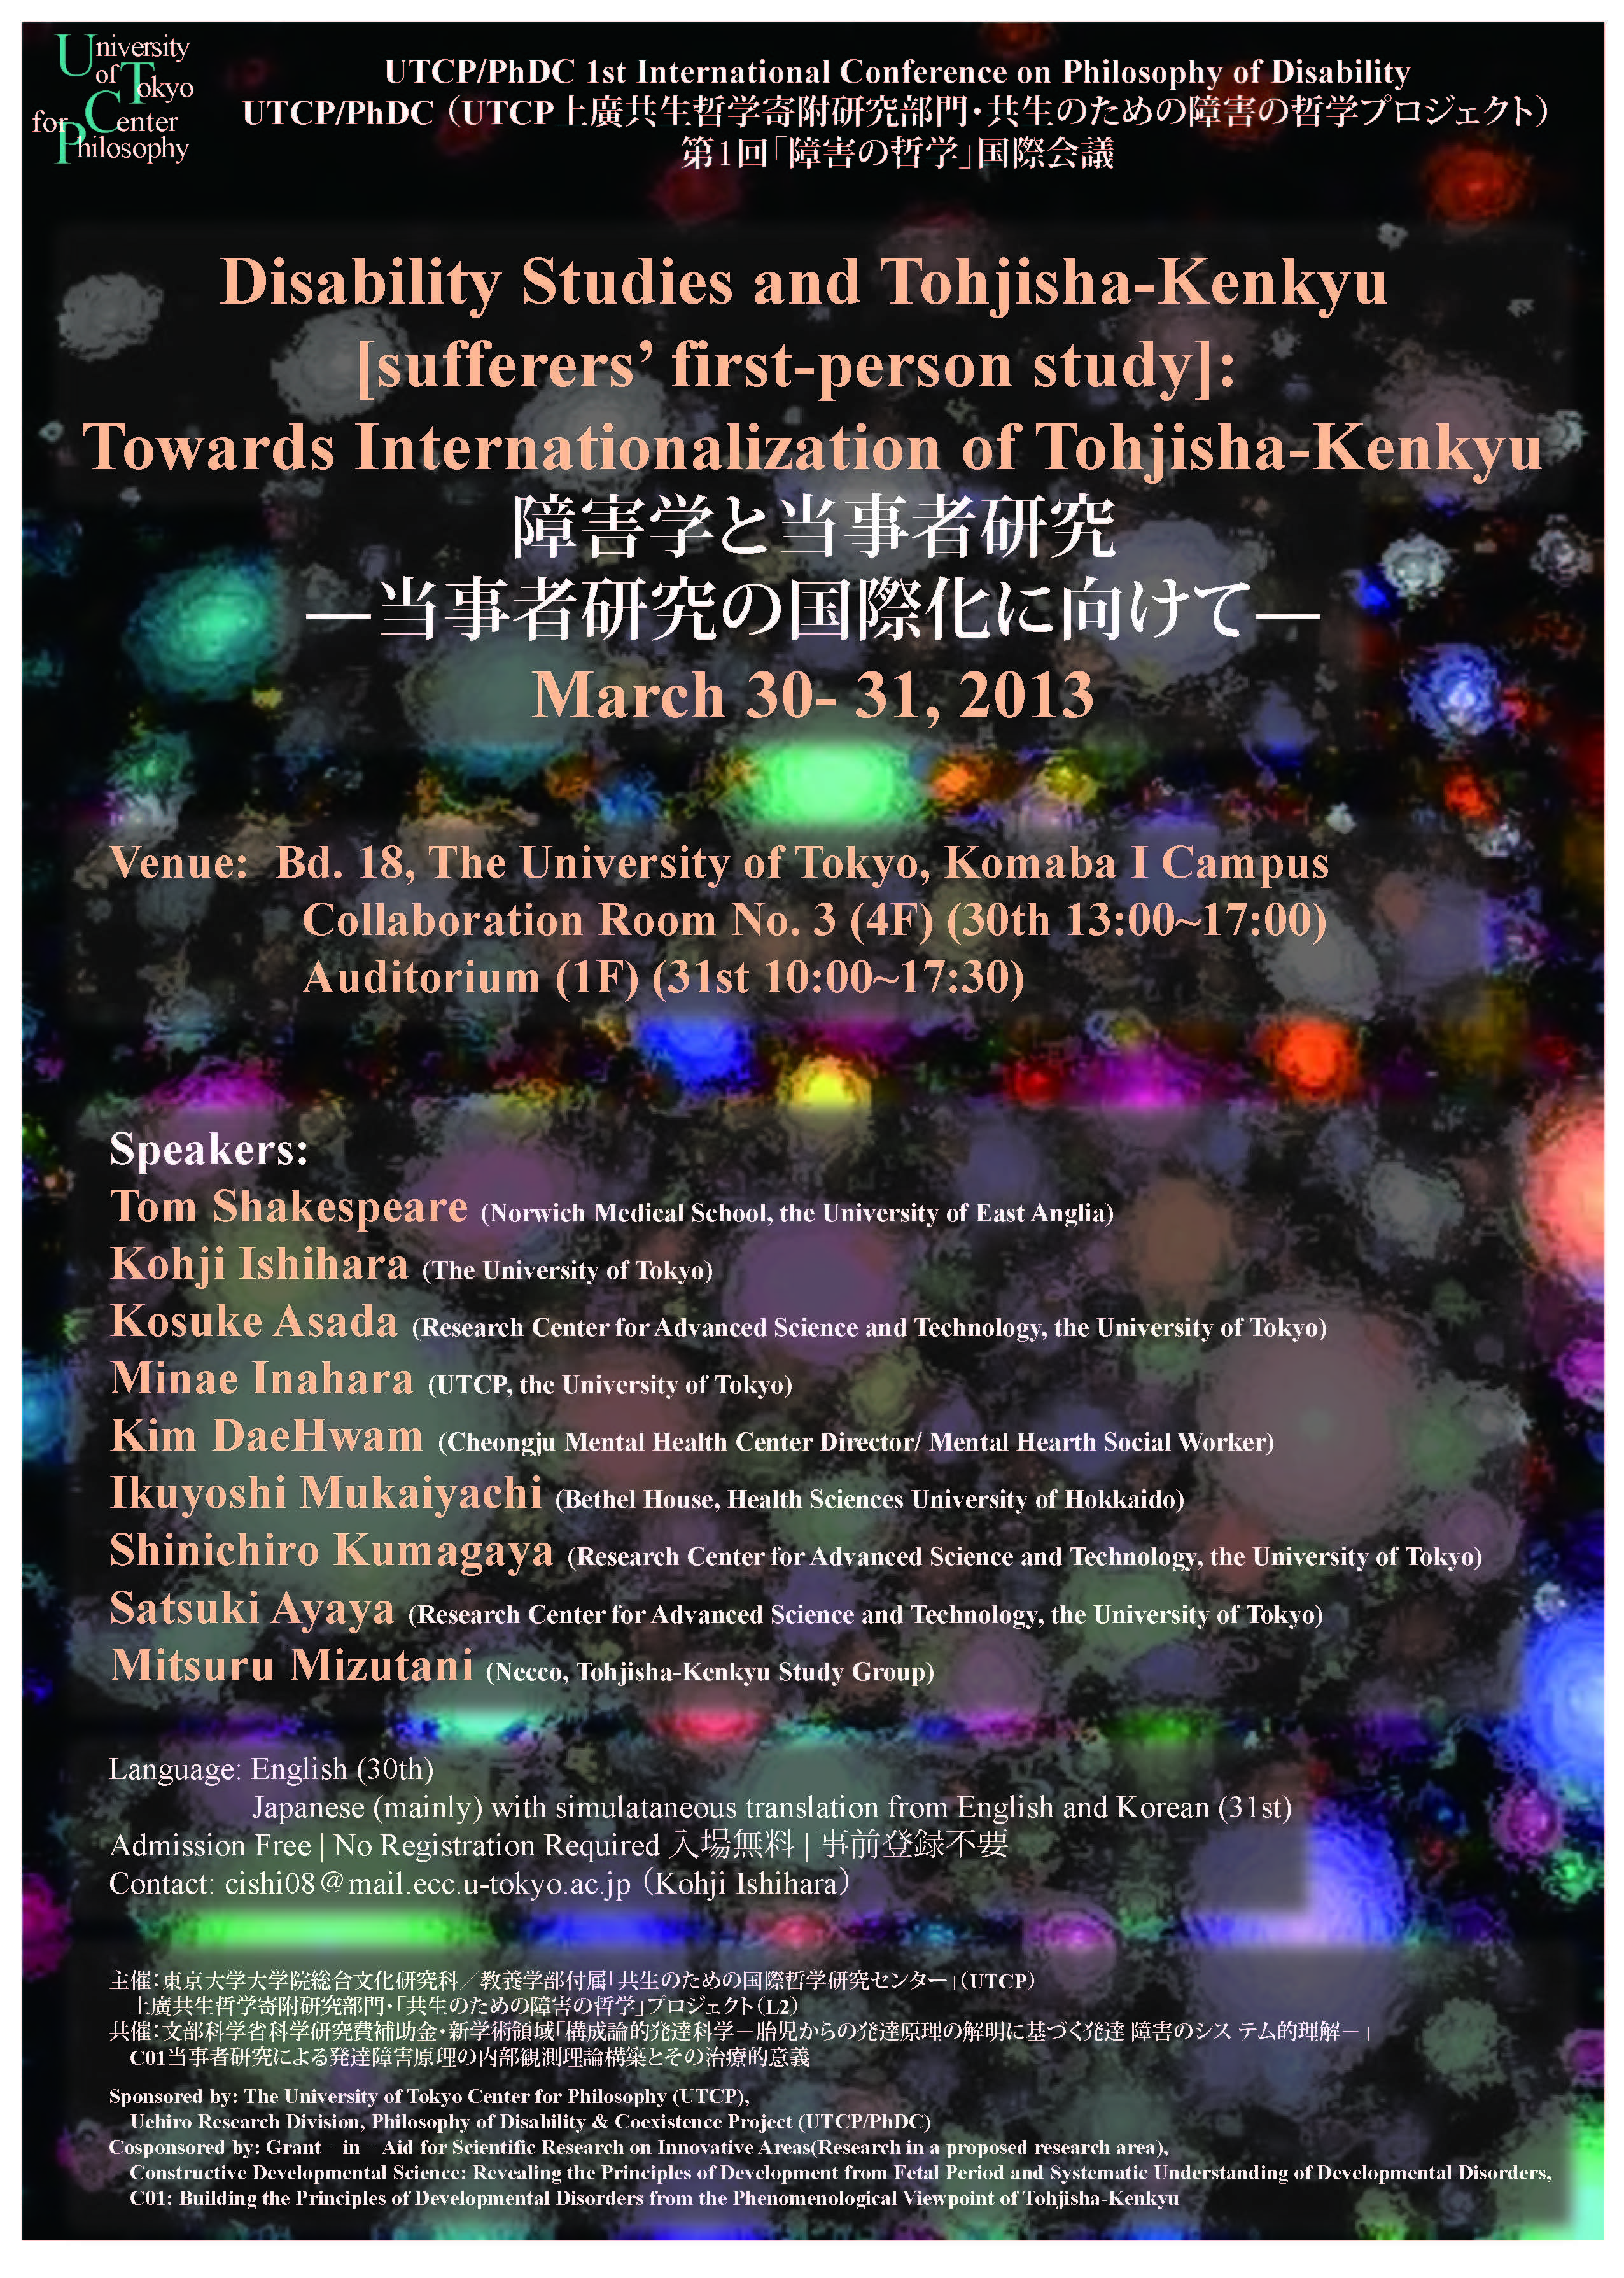 PhDC 1st International Conference Poster Designed by Kazuki Iijima and Minae Inahara